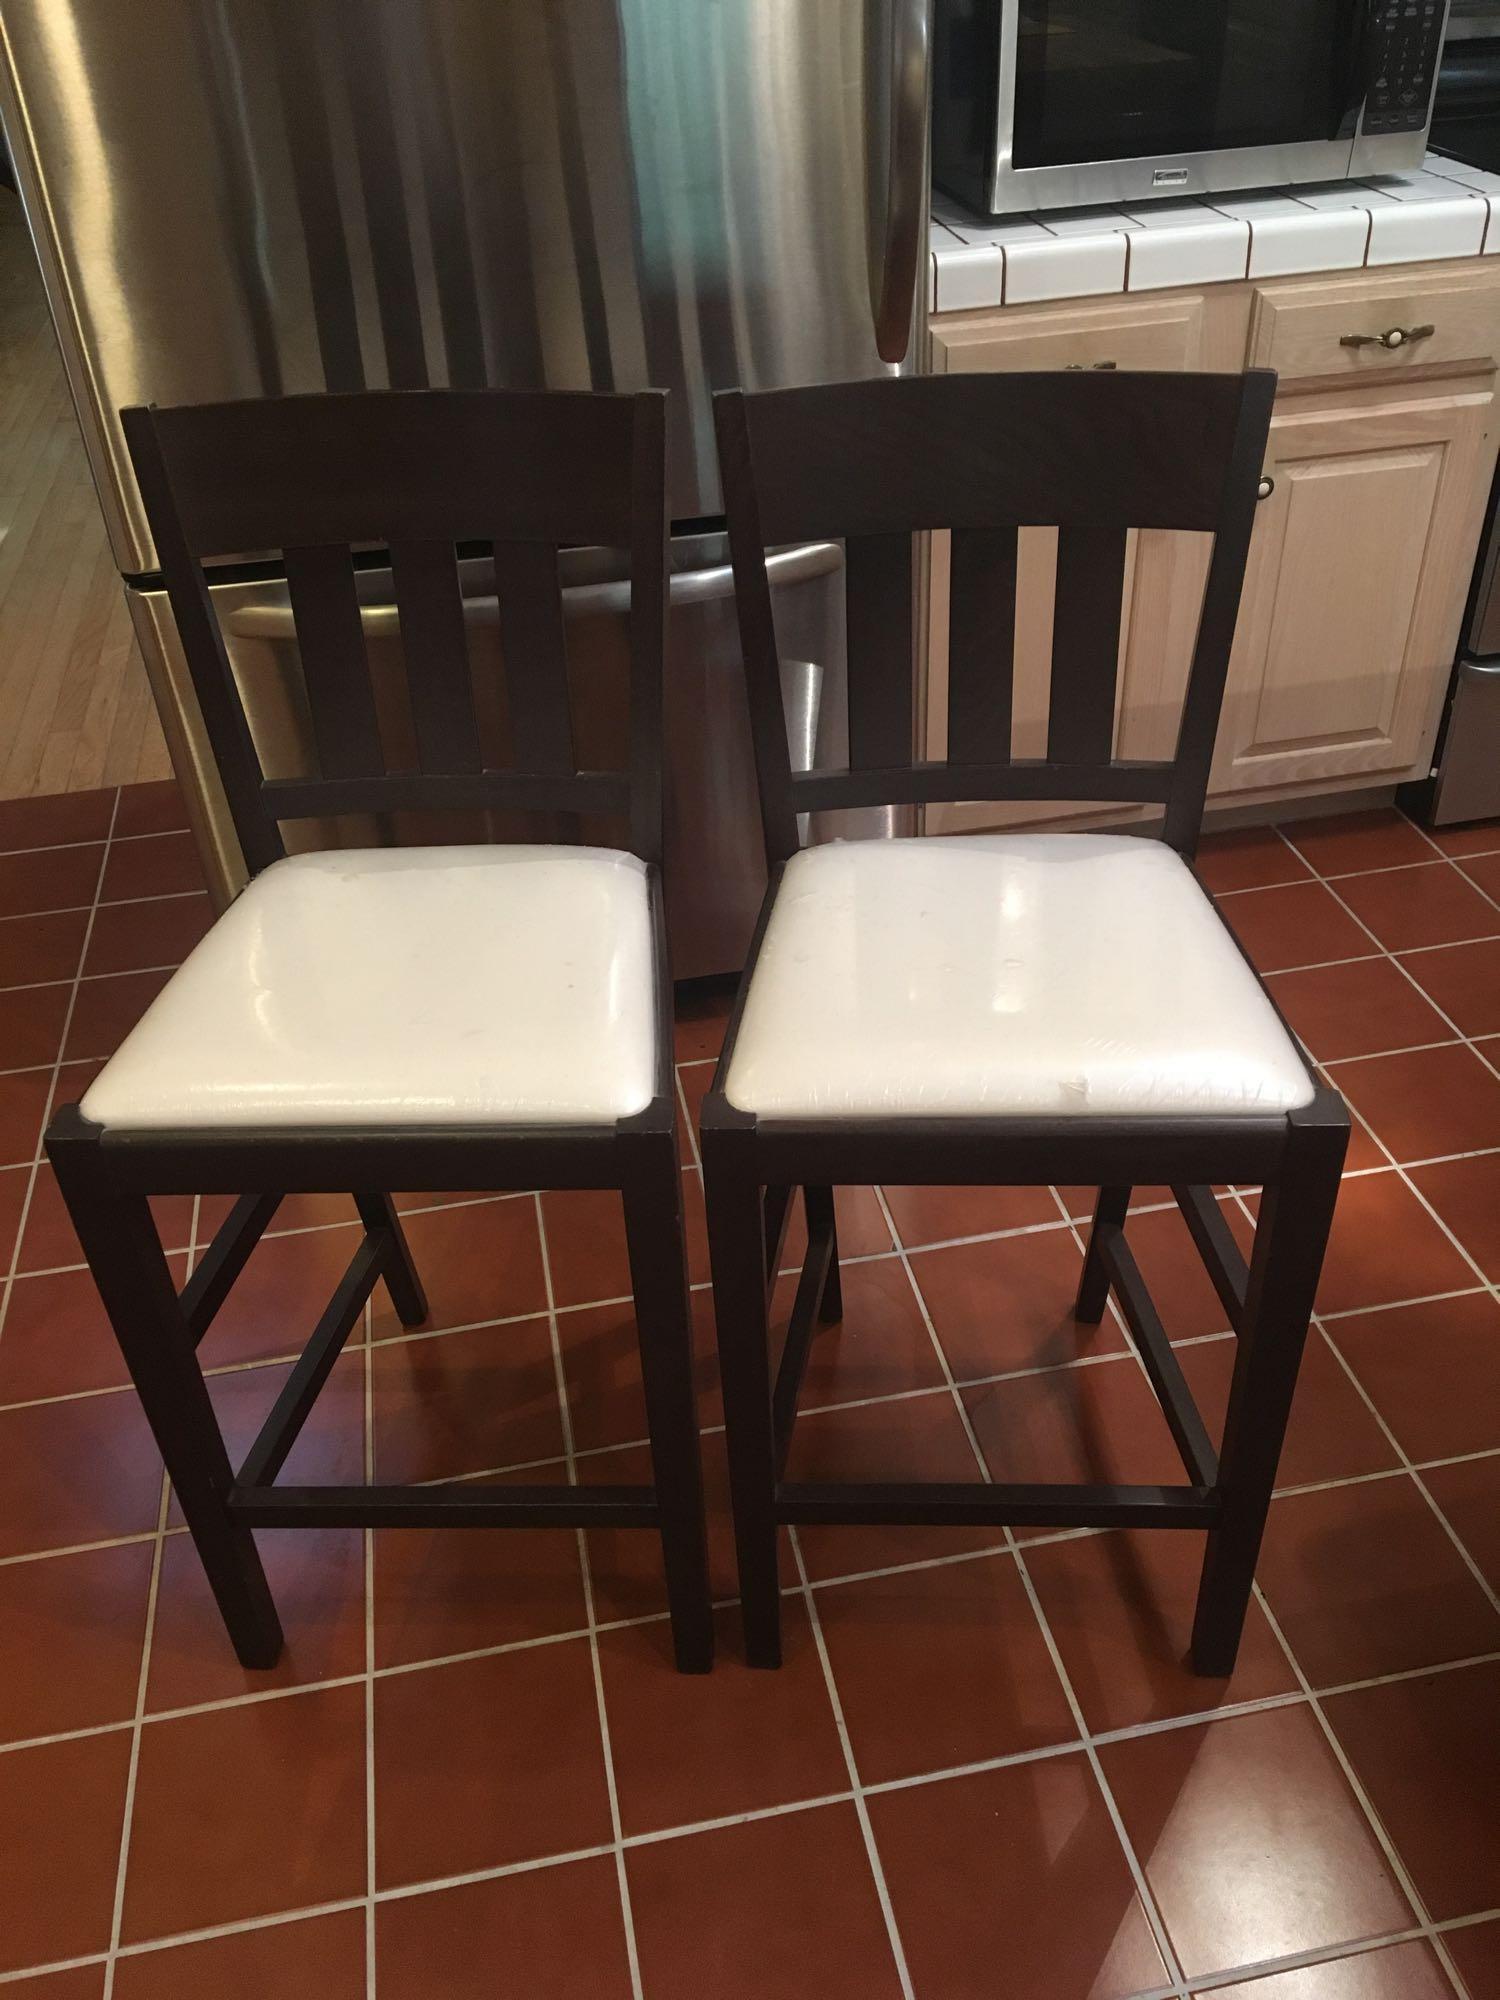 2 matching bar chair/stools (SPRING MILLS)